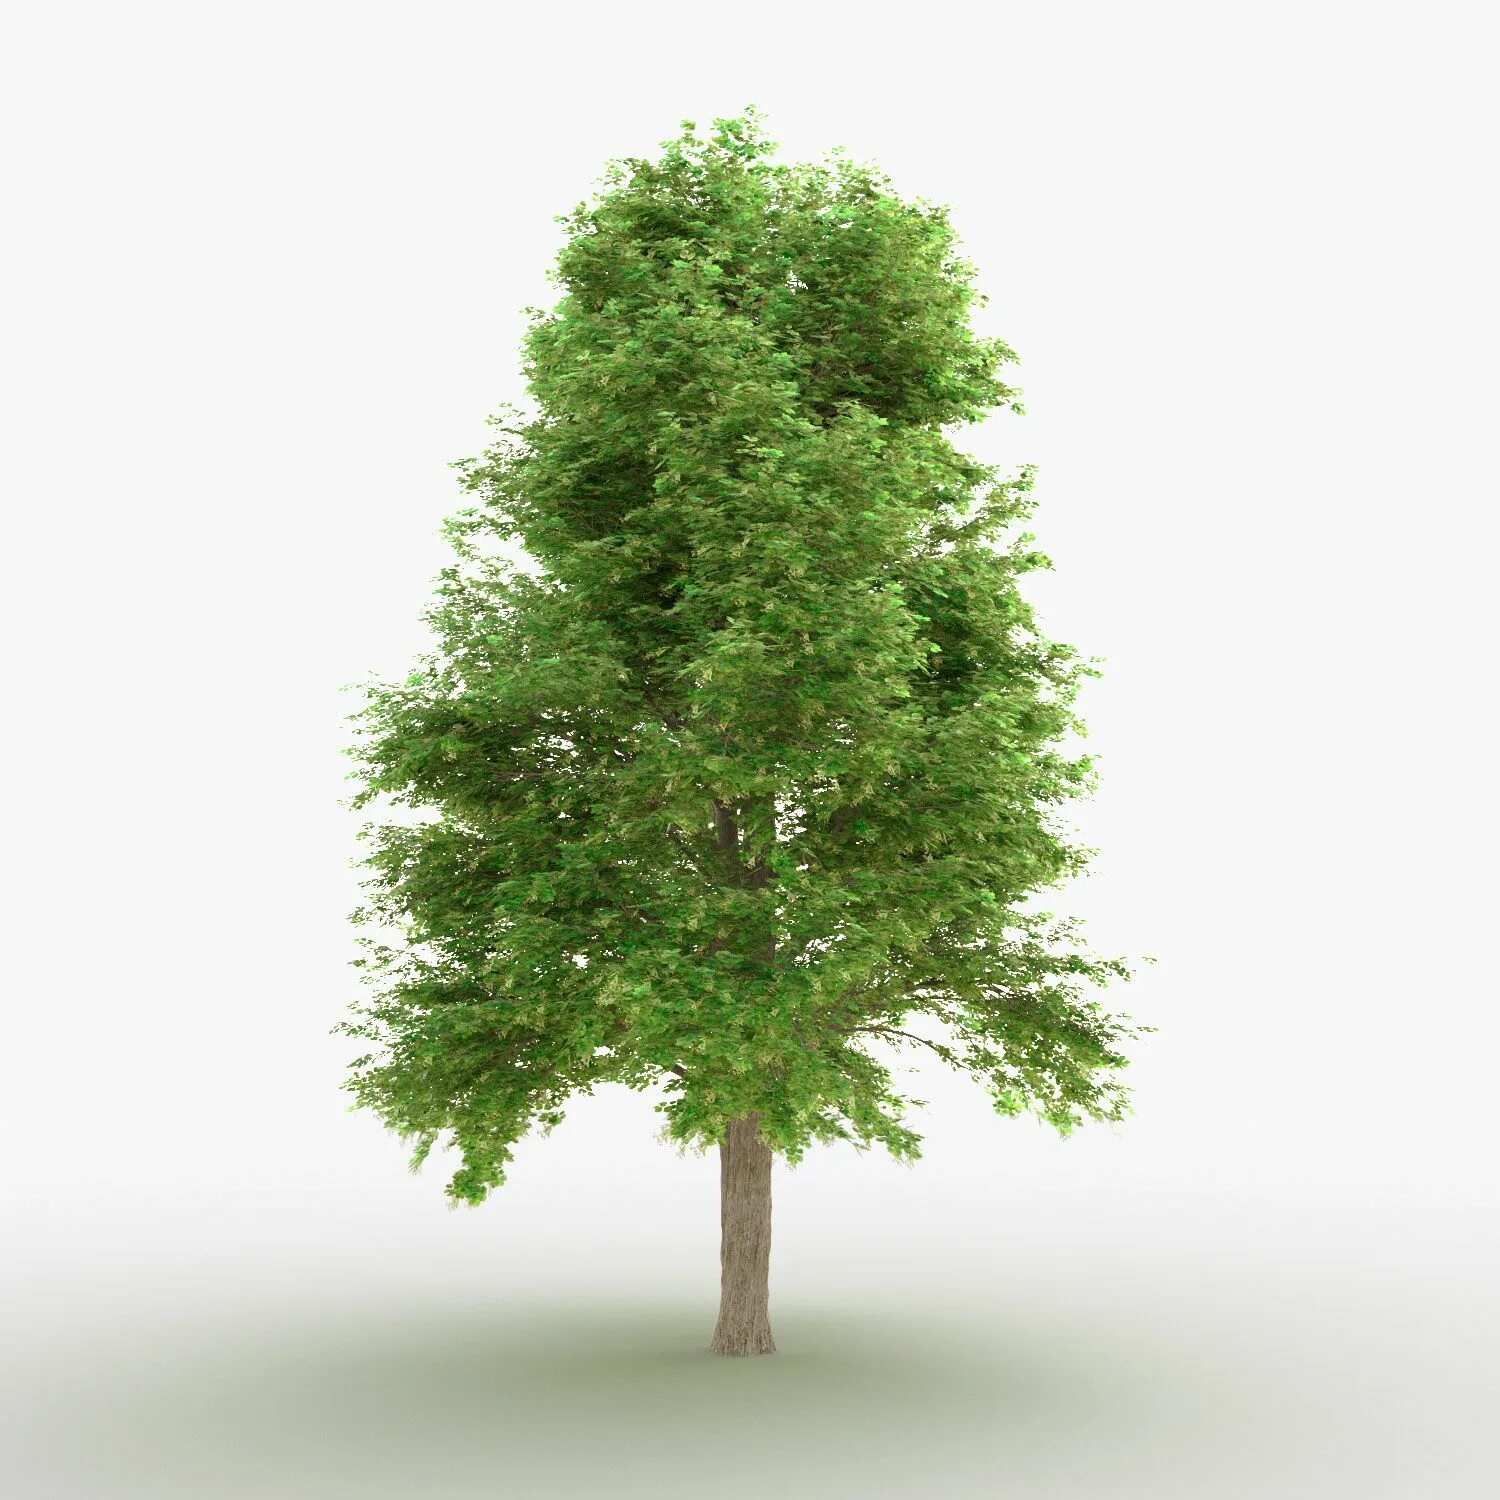 Дерево в 3 d. Деревья в 3ds Max. Деревья для 3d Max. Дерево модель 3ds Max. Липа дерево модель 3ds Max.